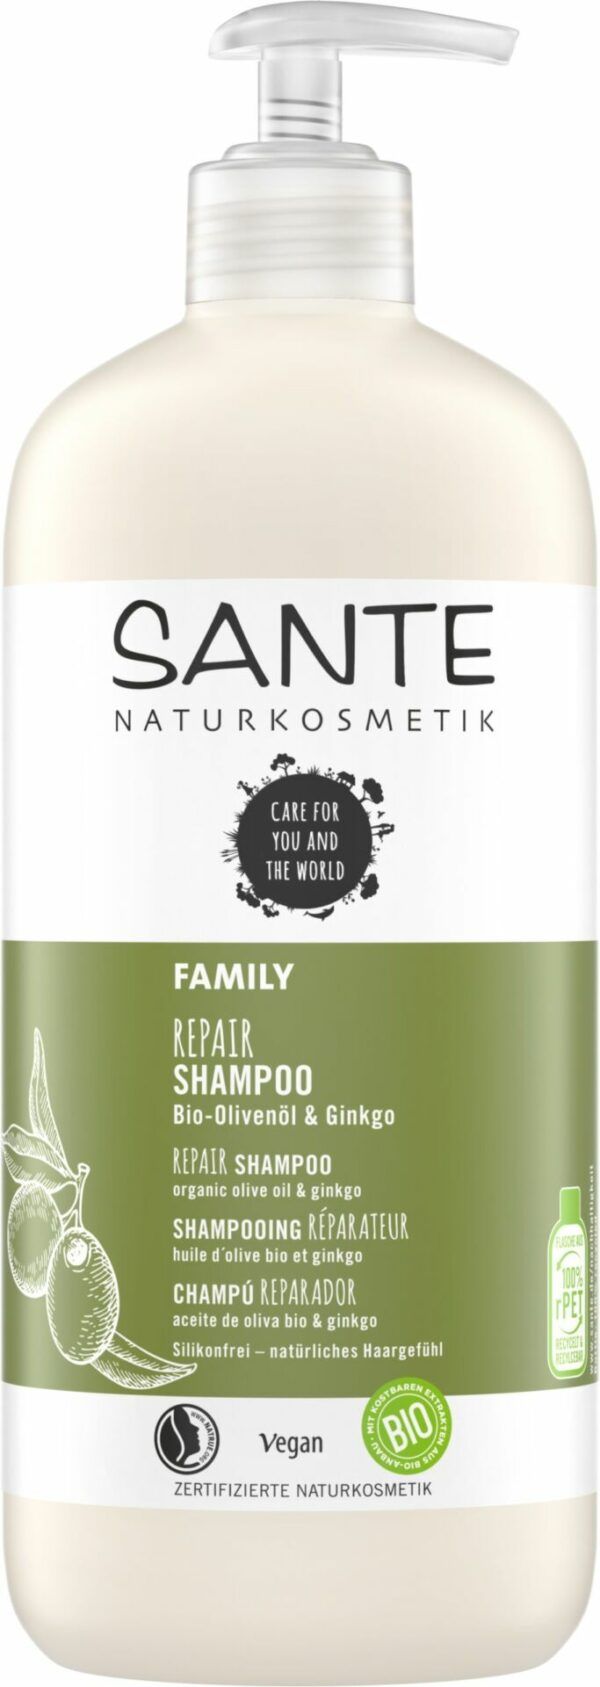 Sante FAMILY Repair Shampoo Bio-Olivenöl & Ginkgo 500ml